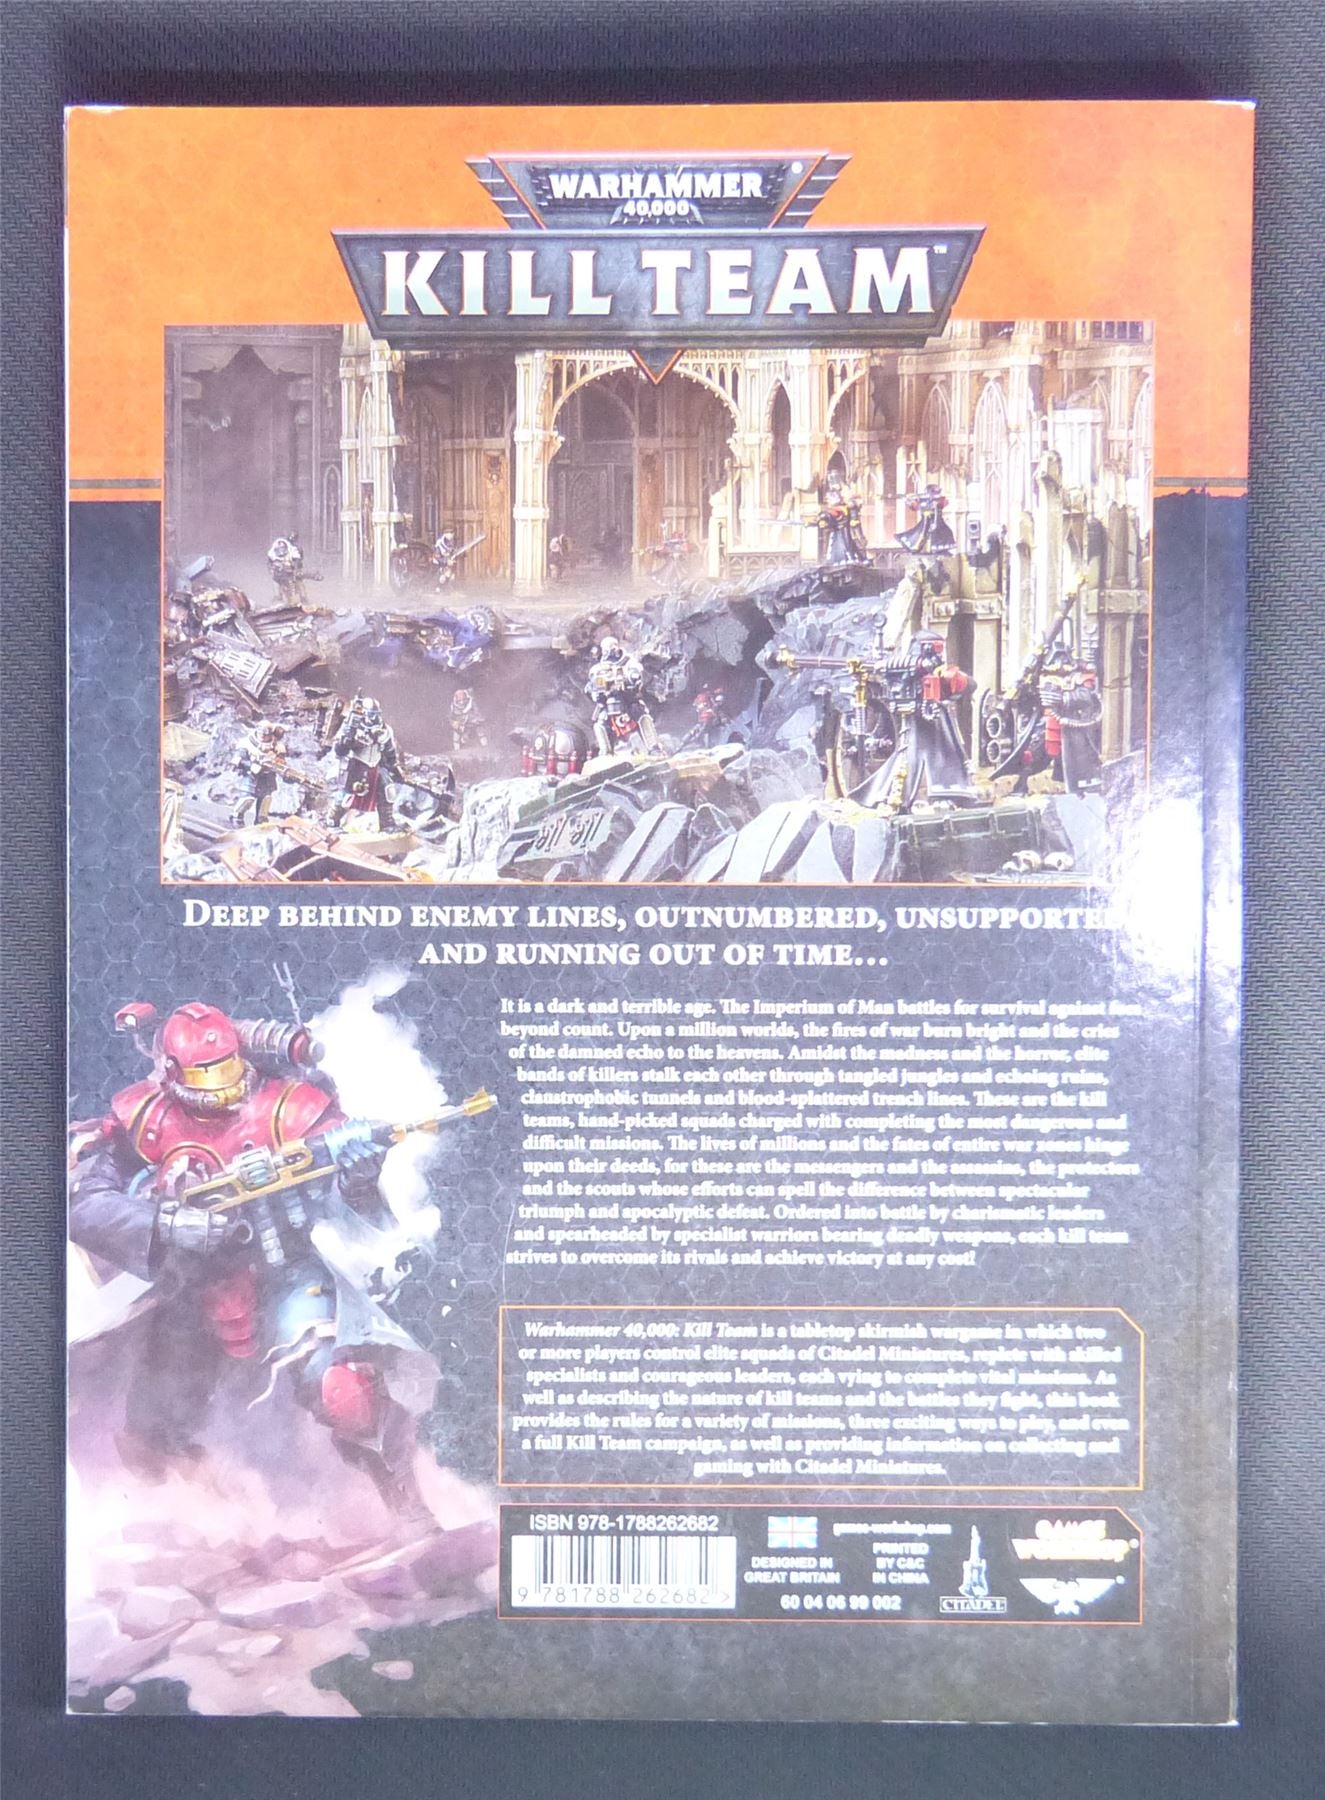 Core Manual - Kill Team - Warhammer AoS 40k #41Z